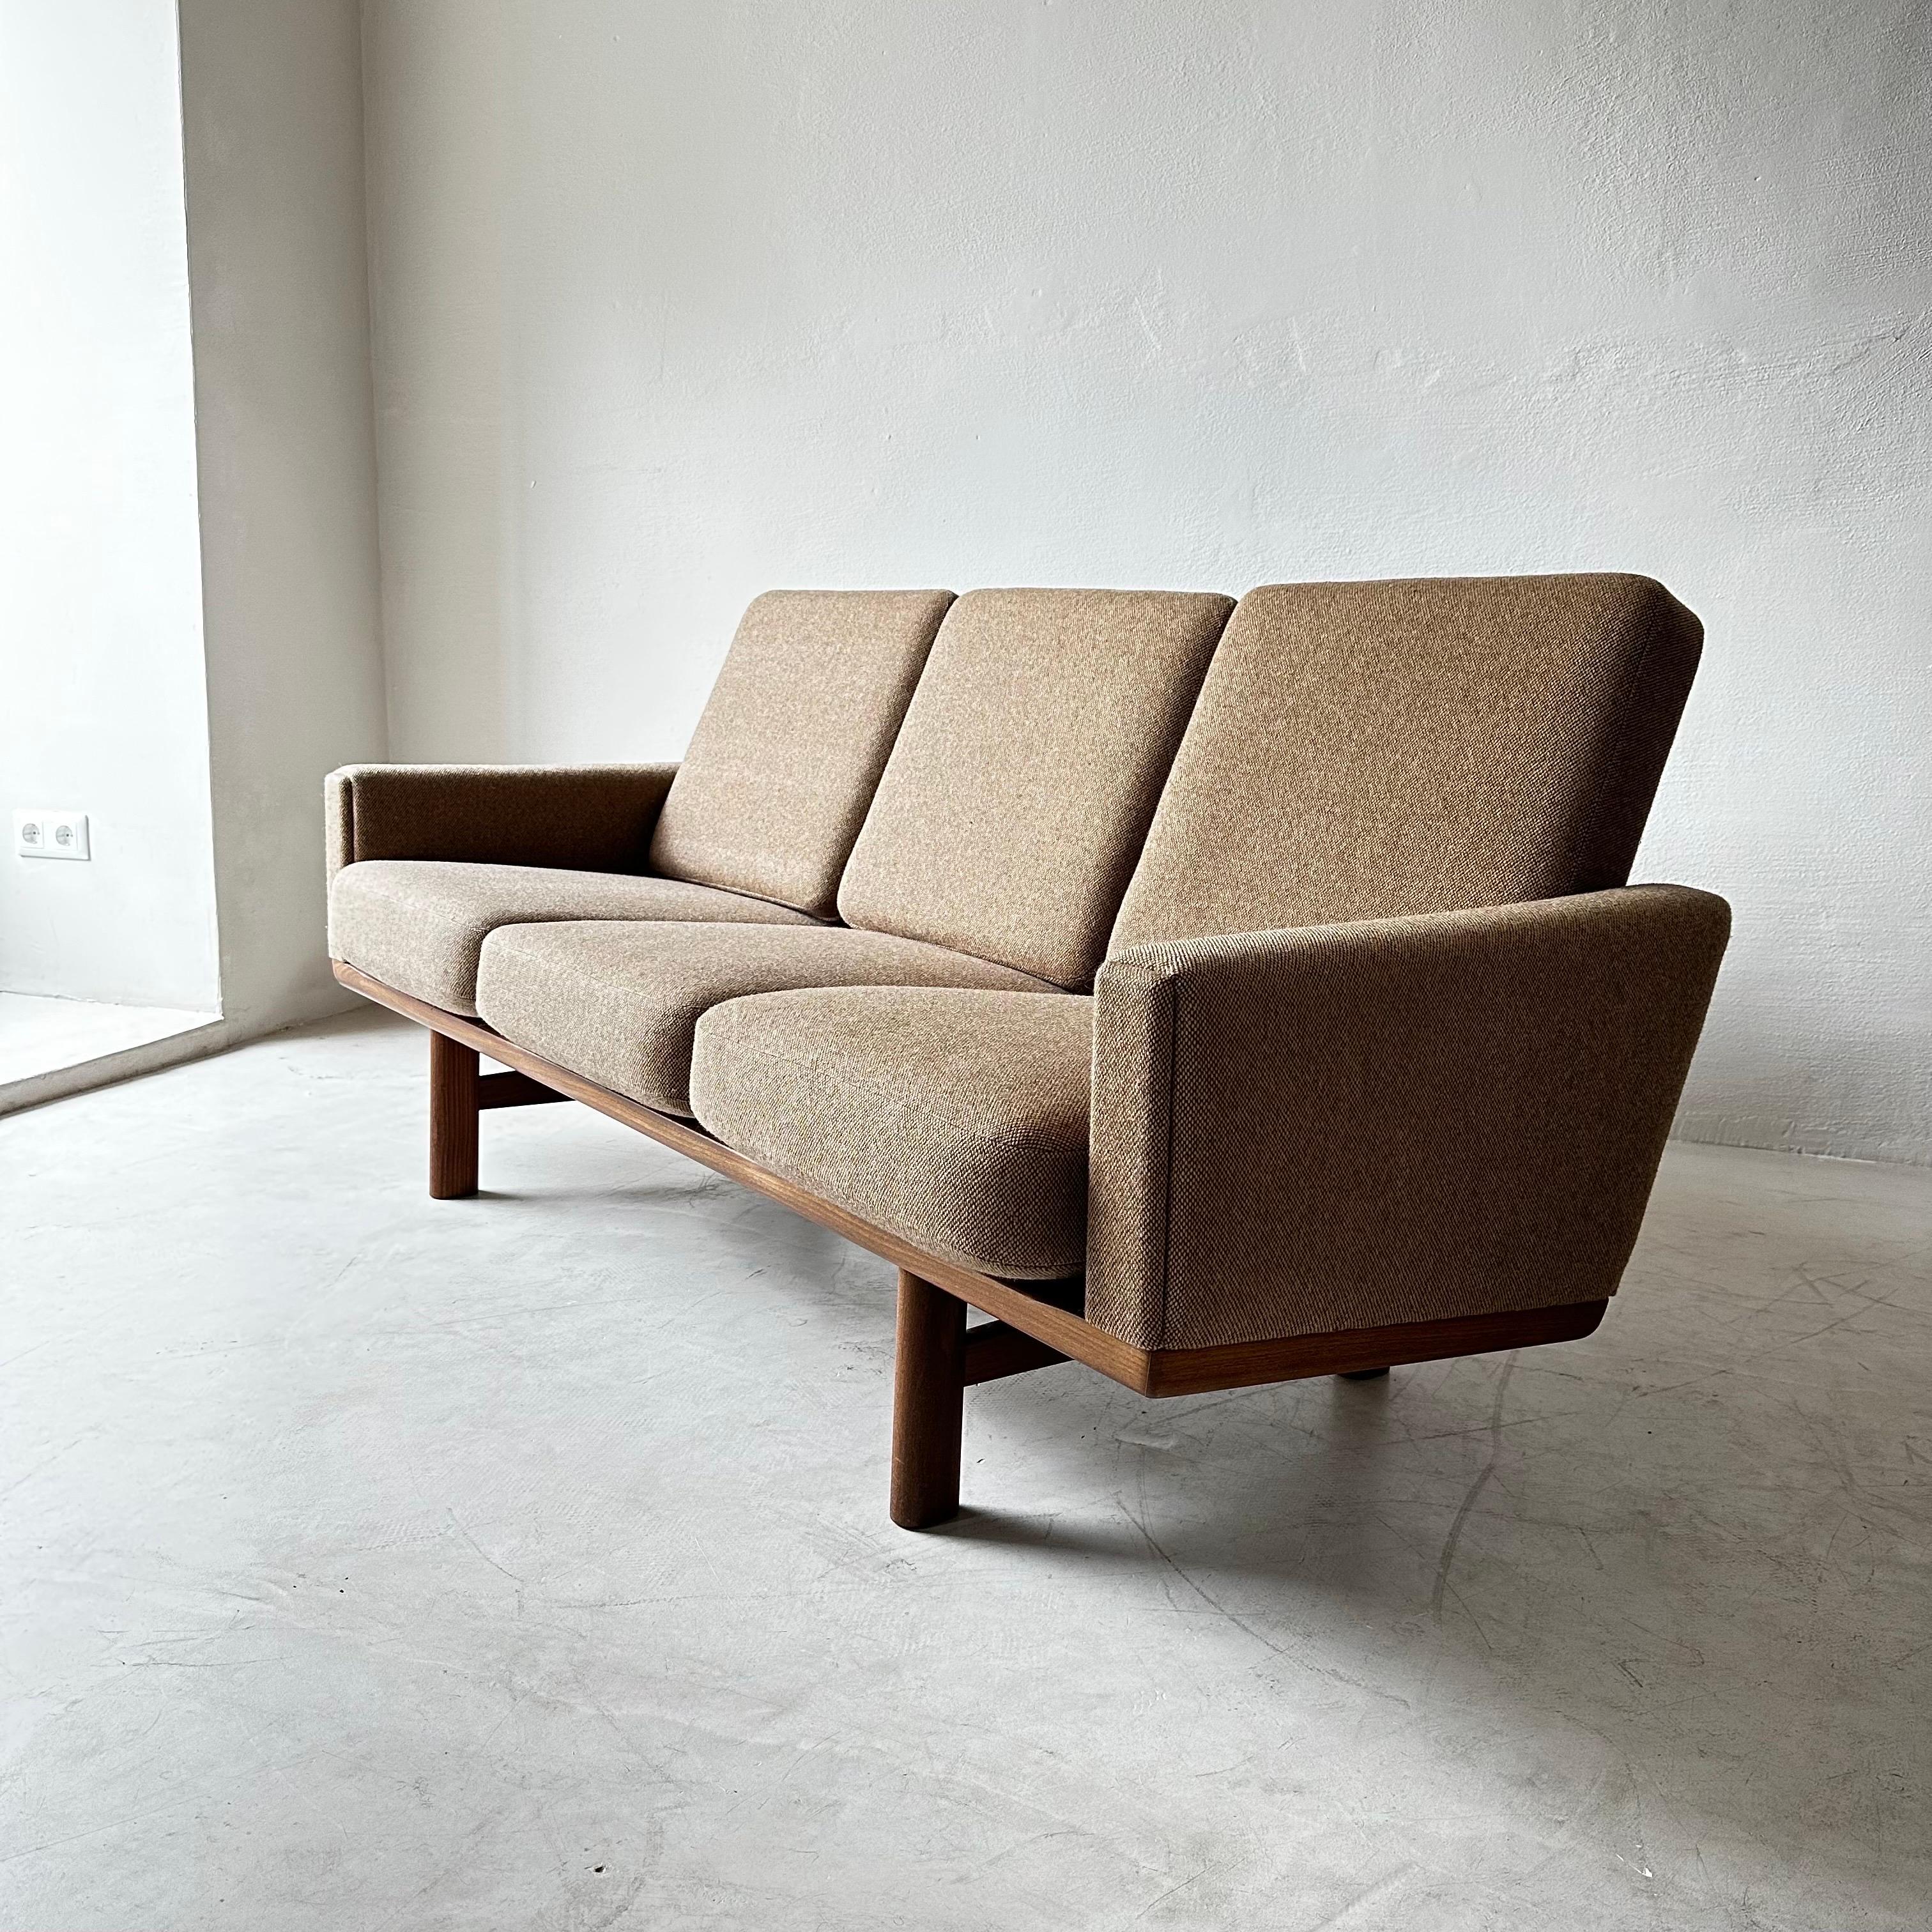 Three-Seat Teak-Framed Sofa, Model GE-236, by Hans Wegner for GETAMA For Sale 3